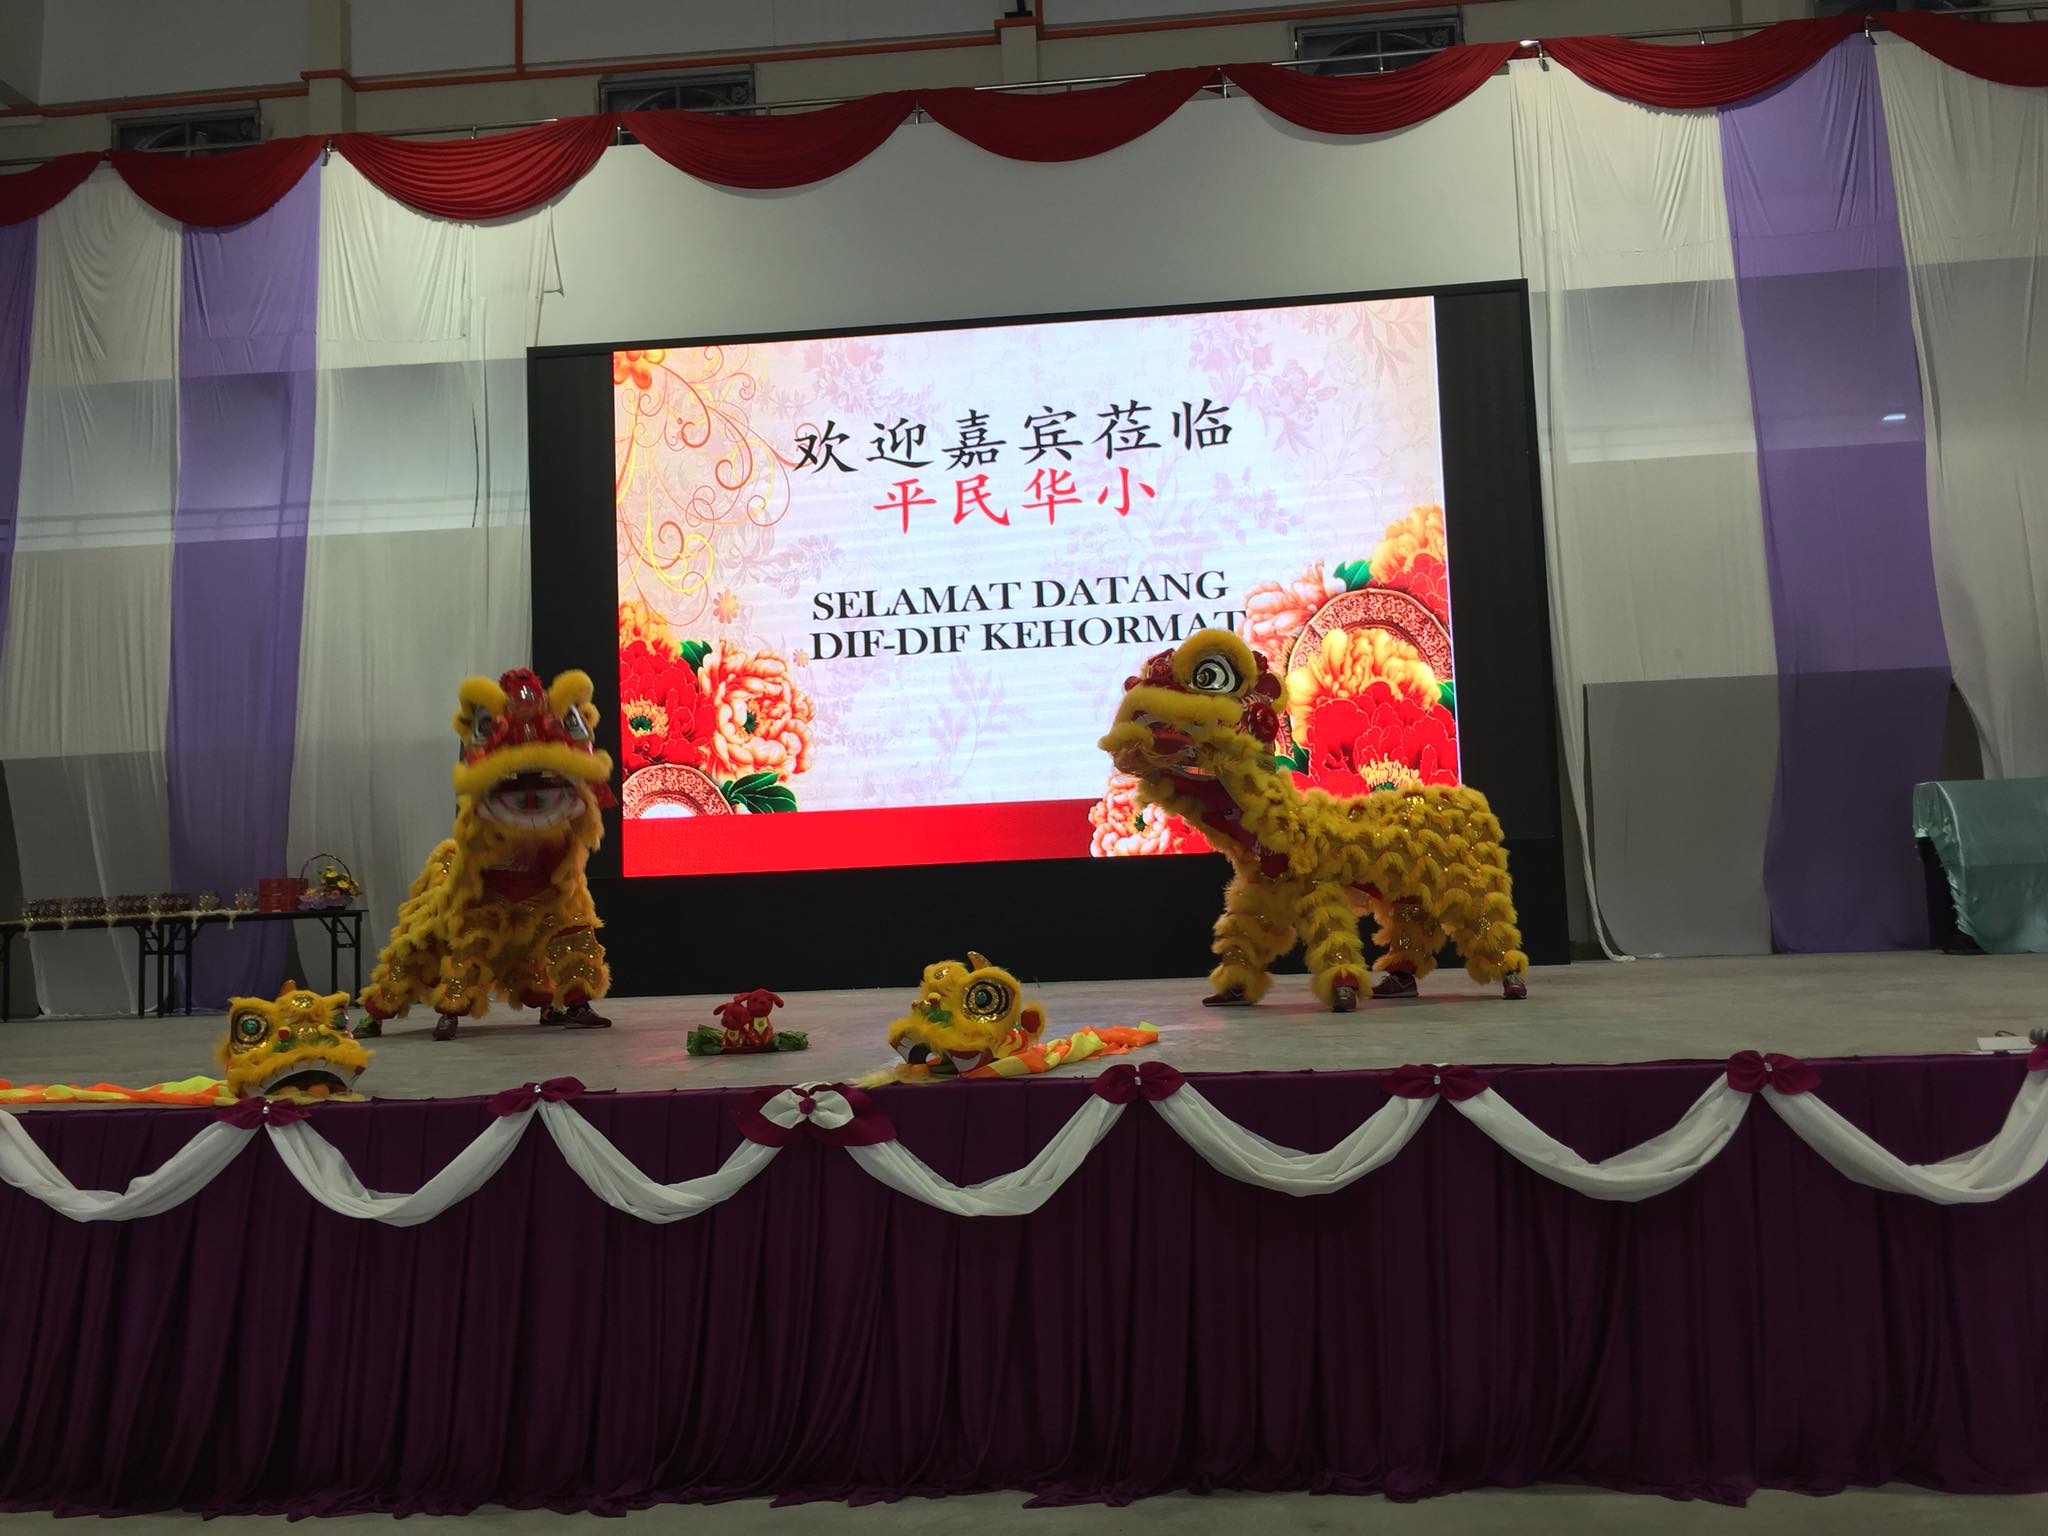 5 unique ways malaysian schools celebrate chinese new year | weirdkaya